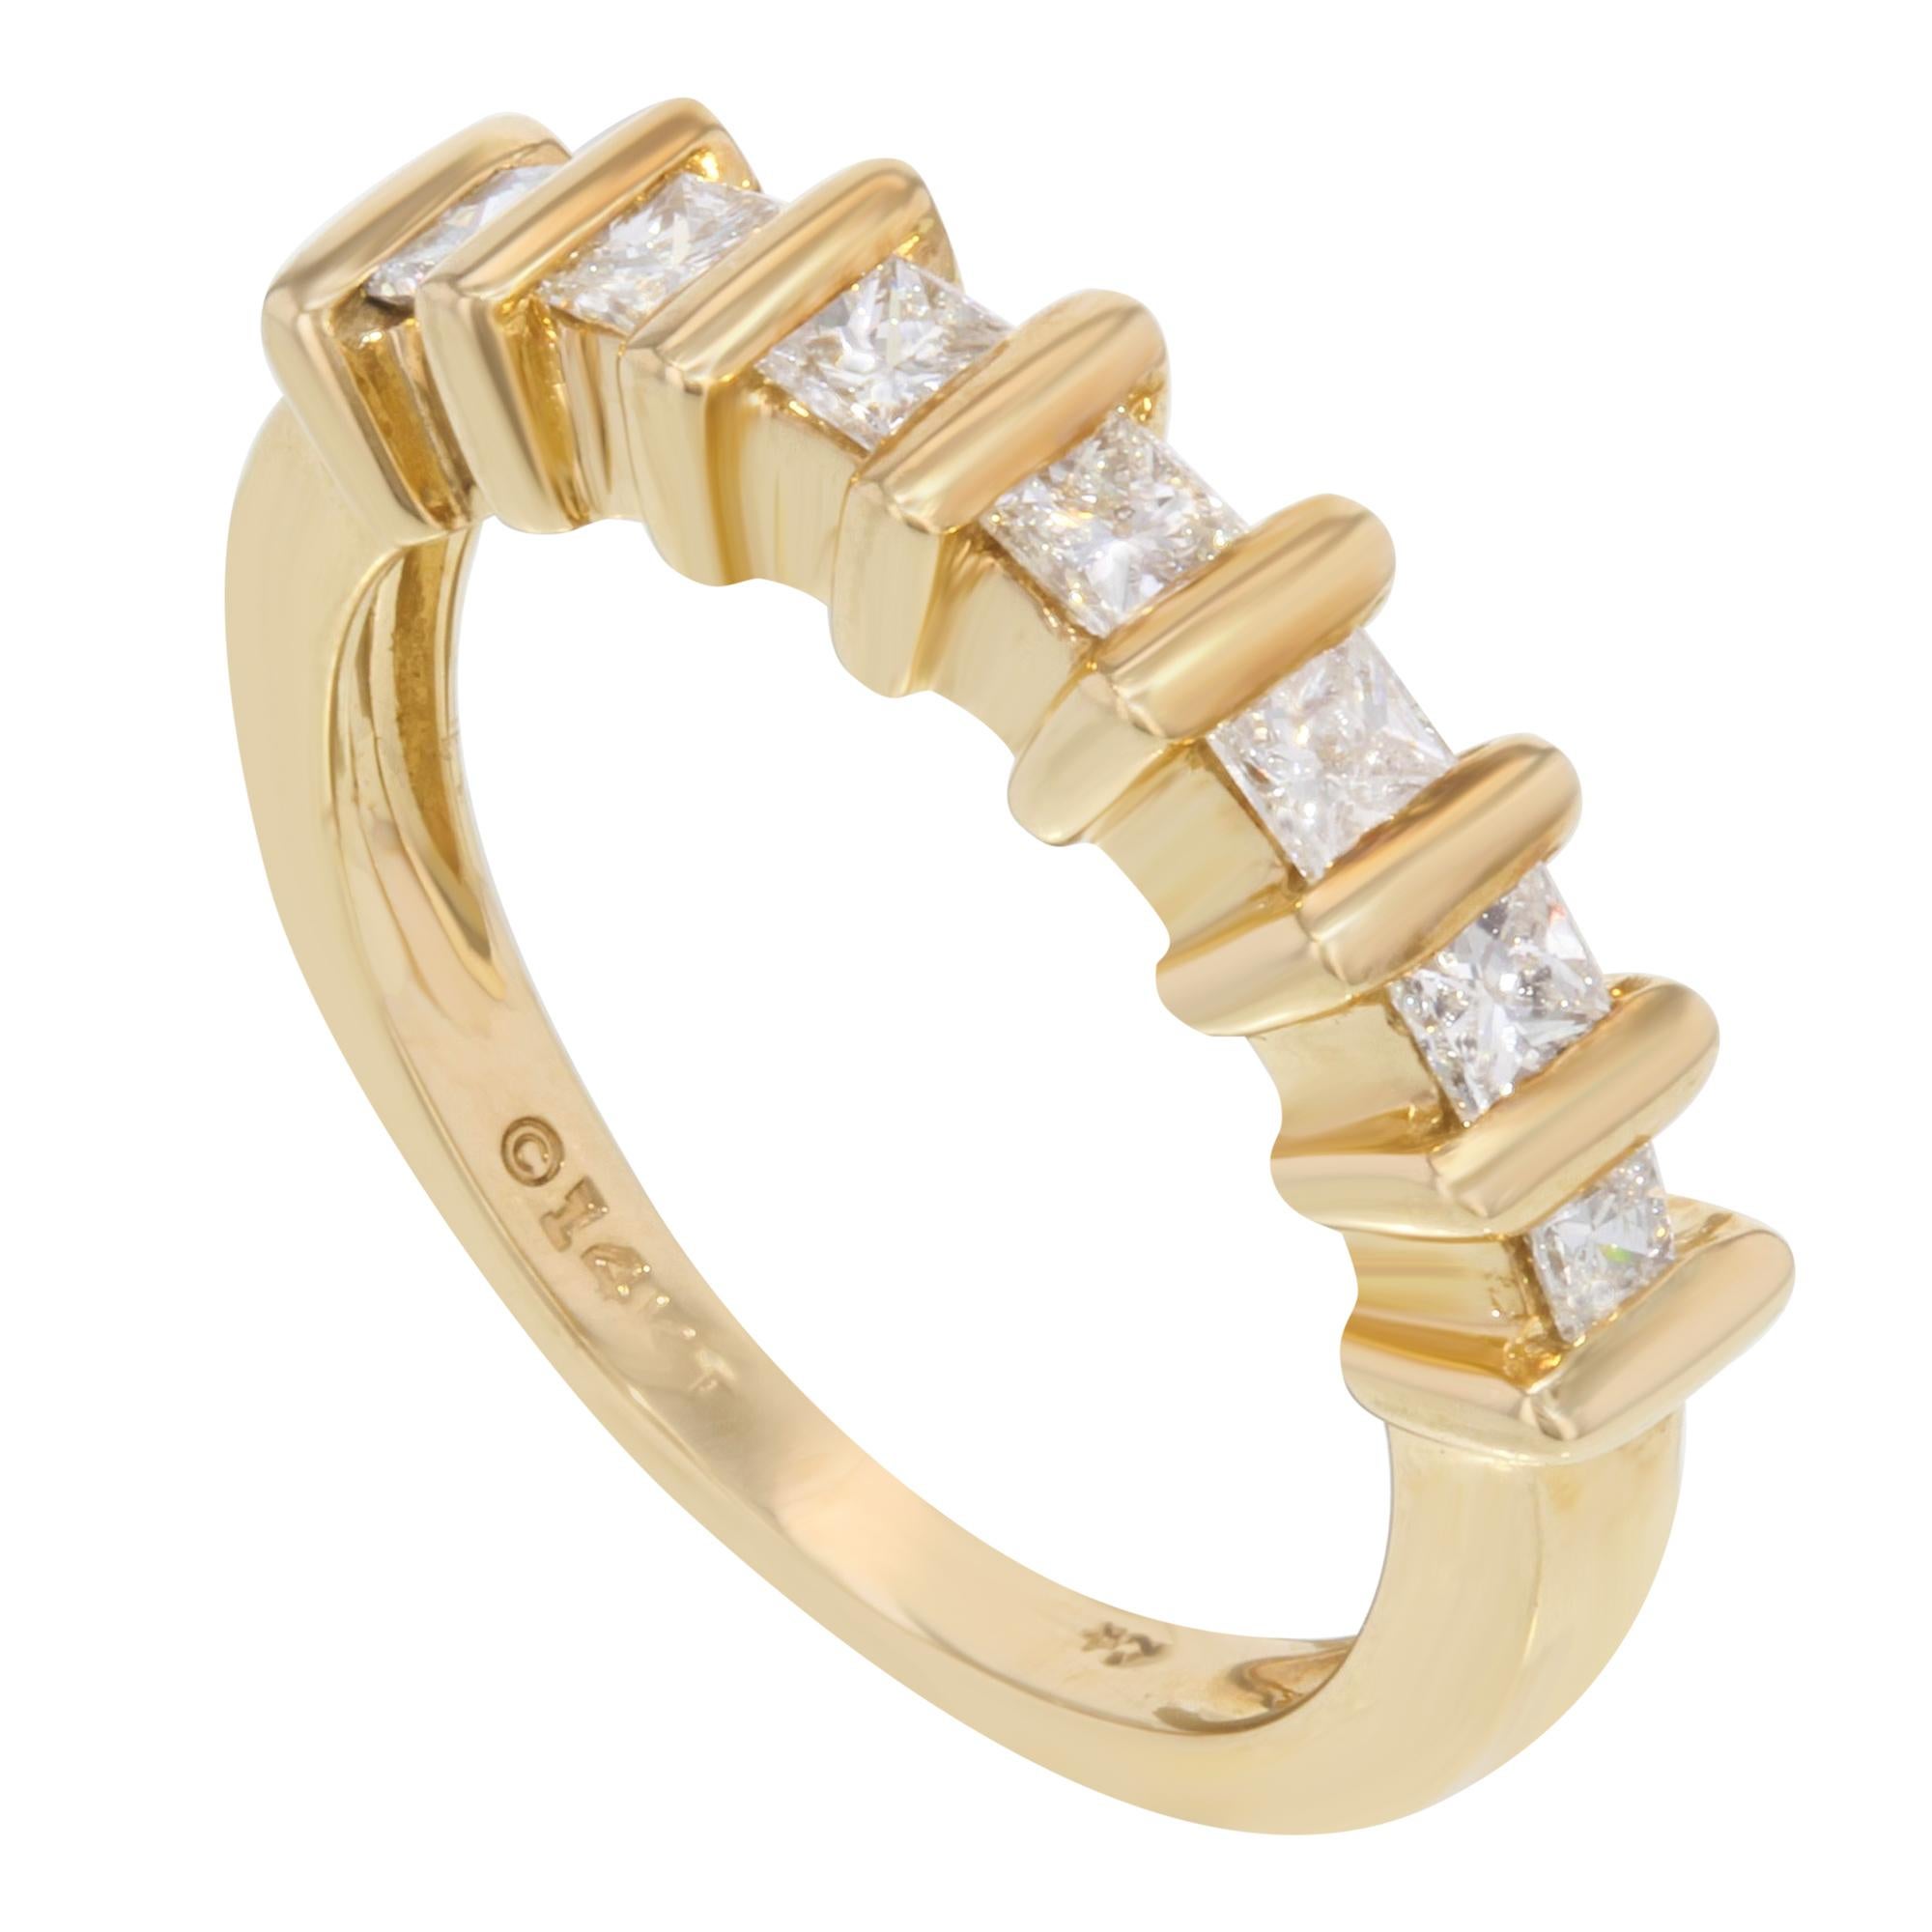 Modern Princess Cut Diamond Wedding Band Ladies Ring 14K Yellow Gold 0.45 Cttw For Sale